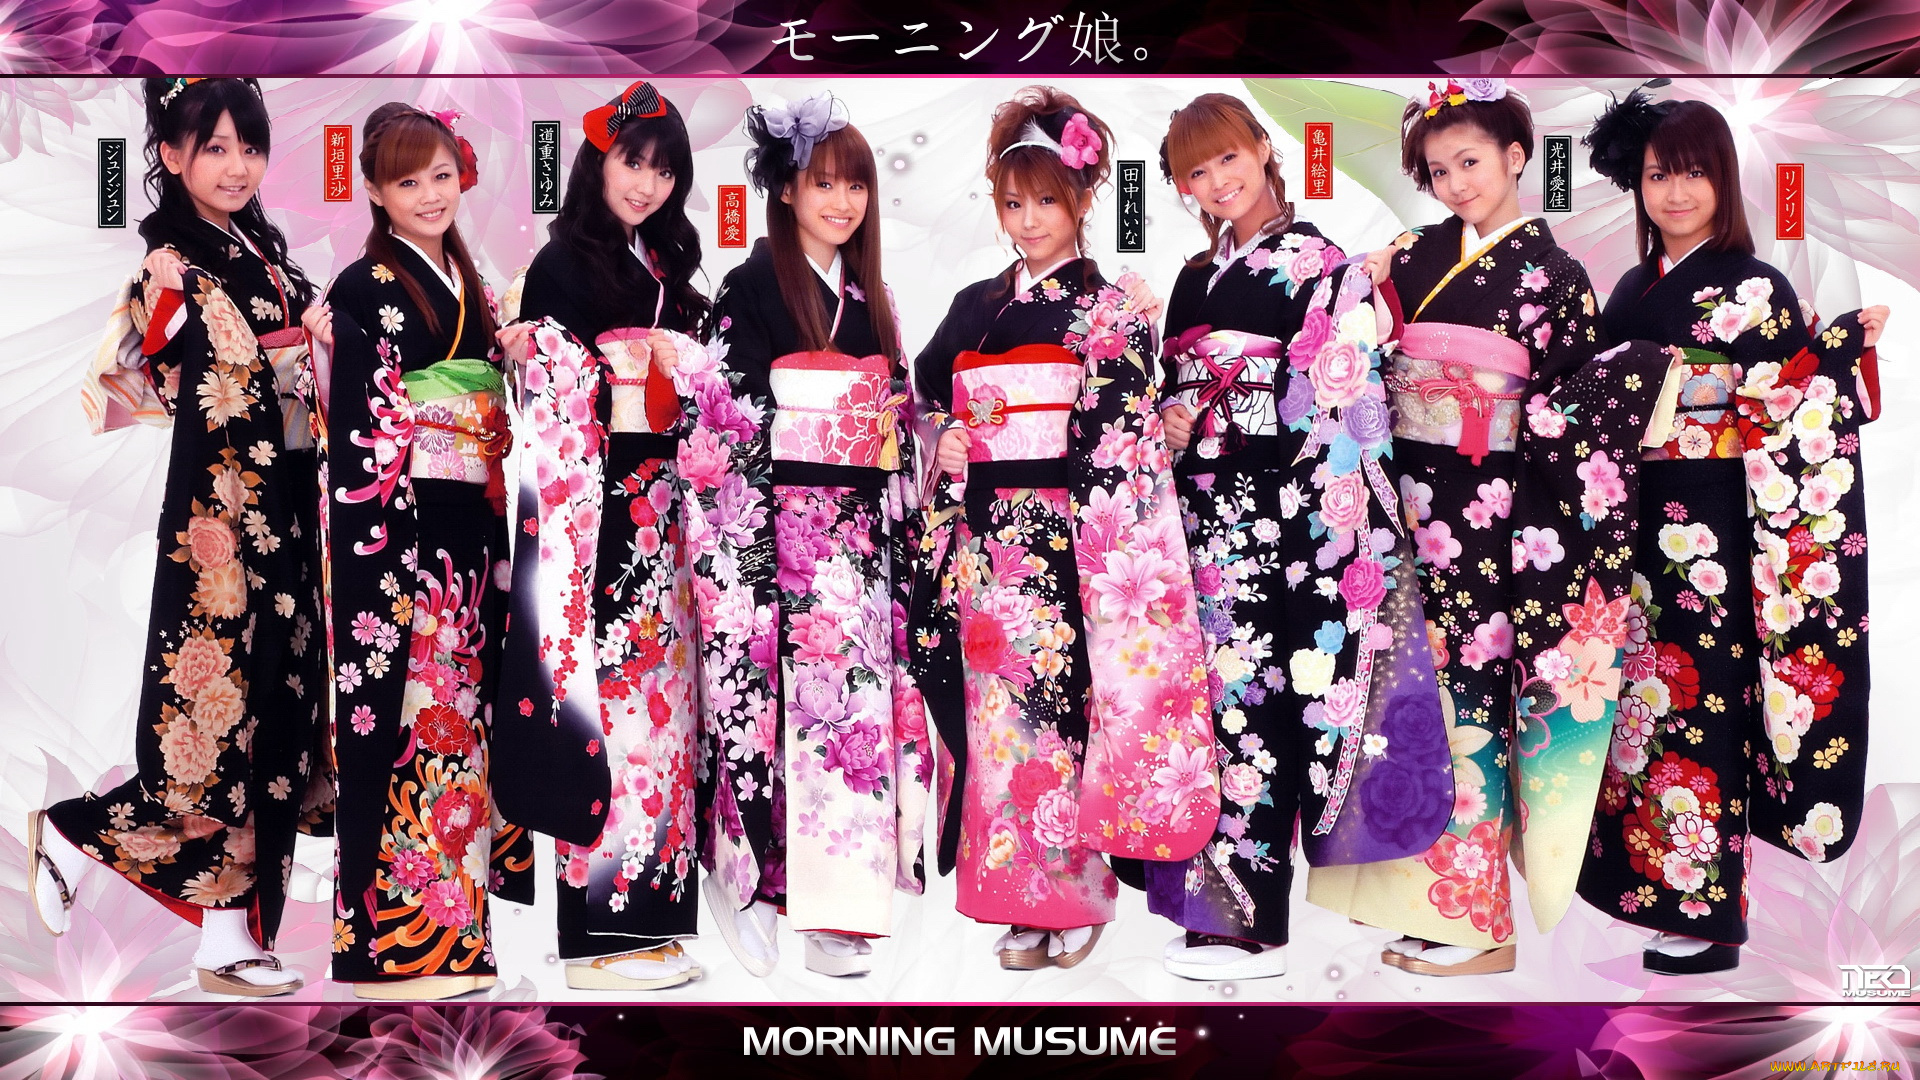 музыка, morning, musume, група, Япония, девушки